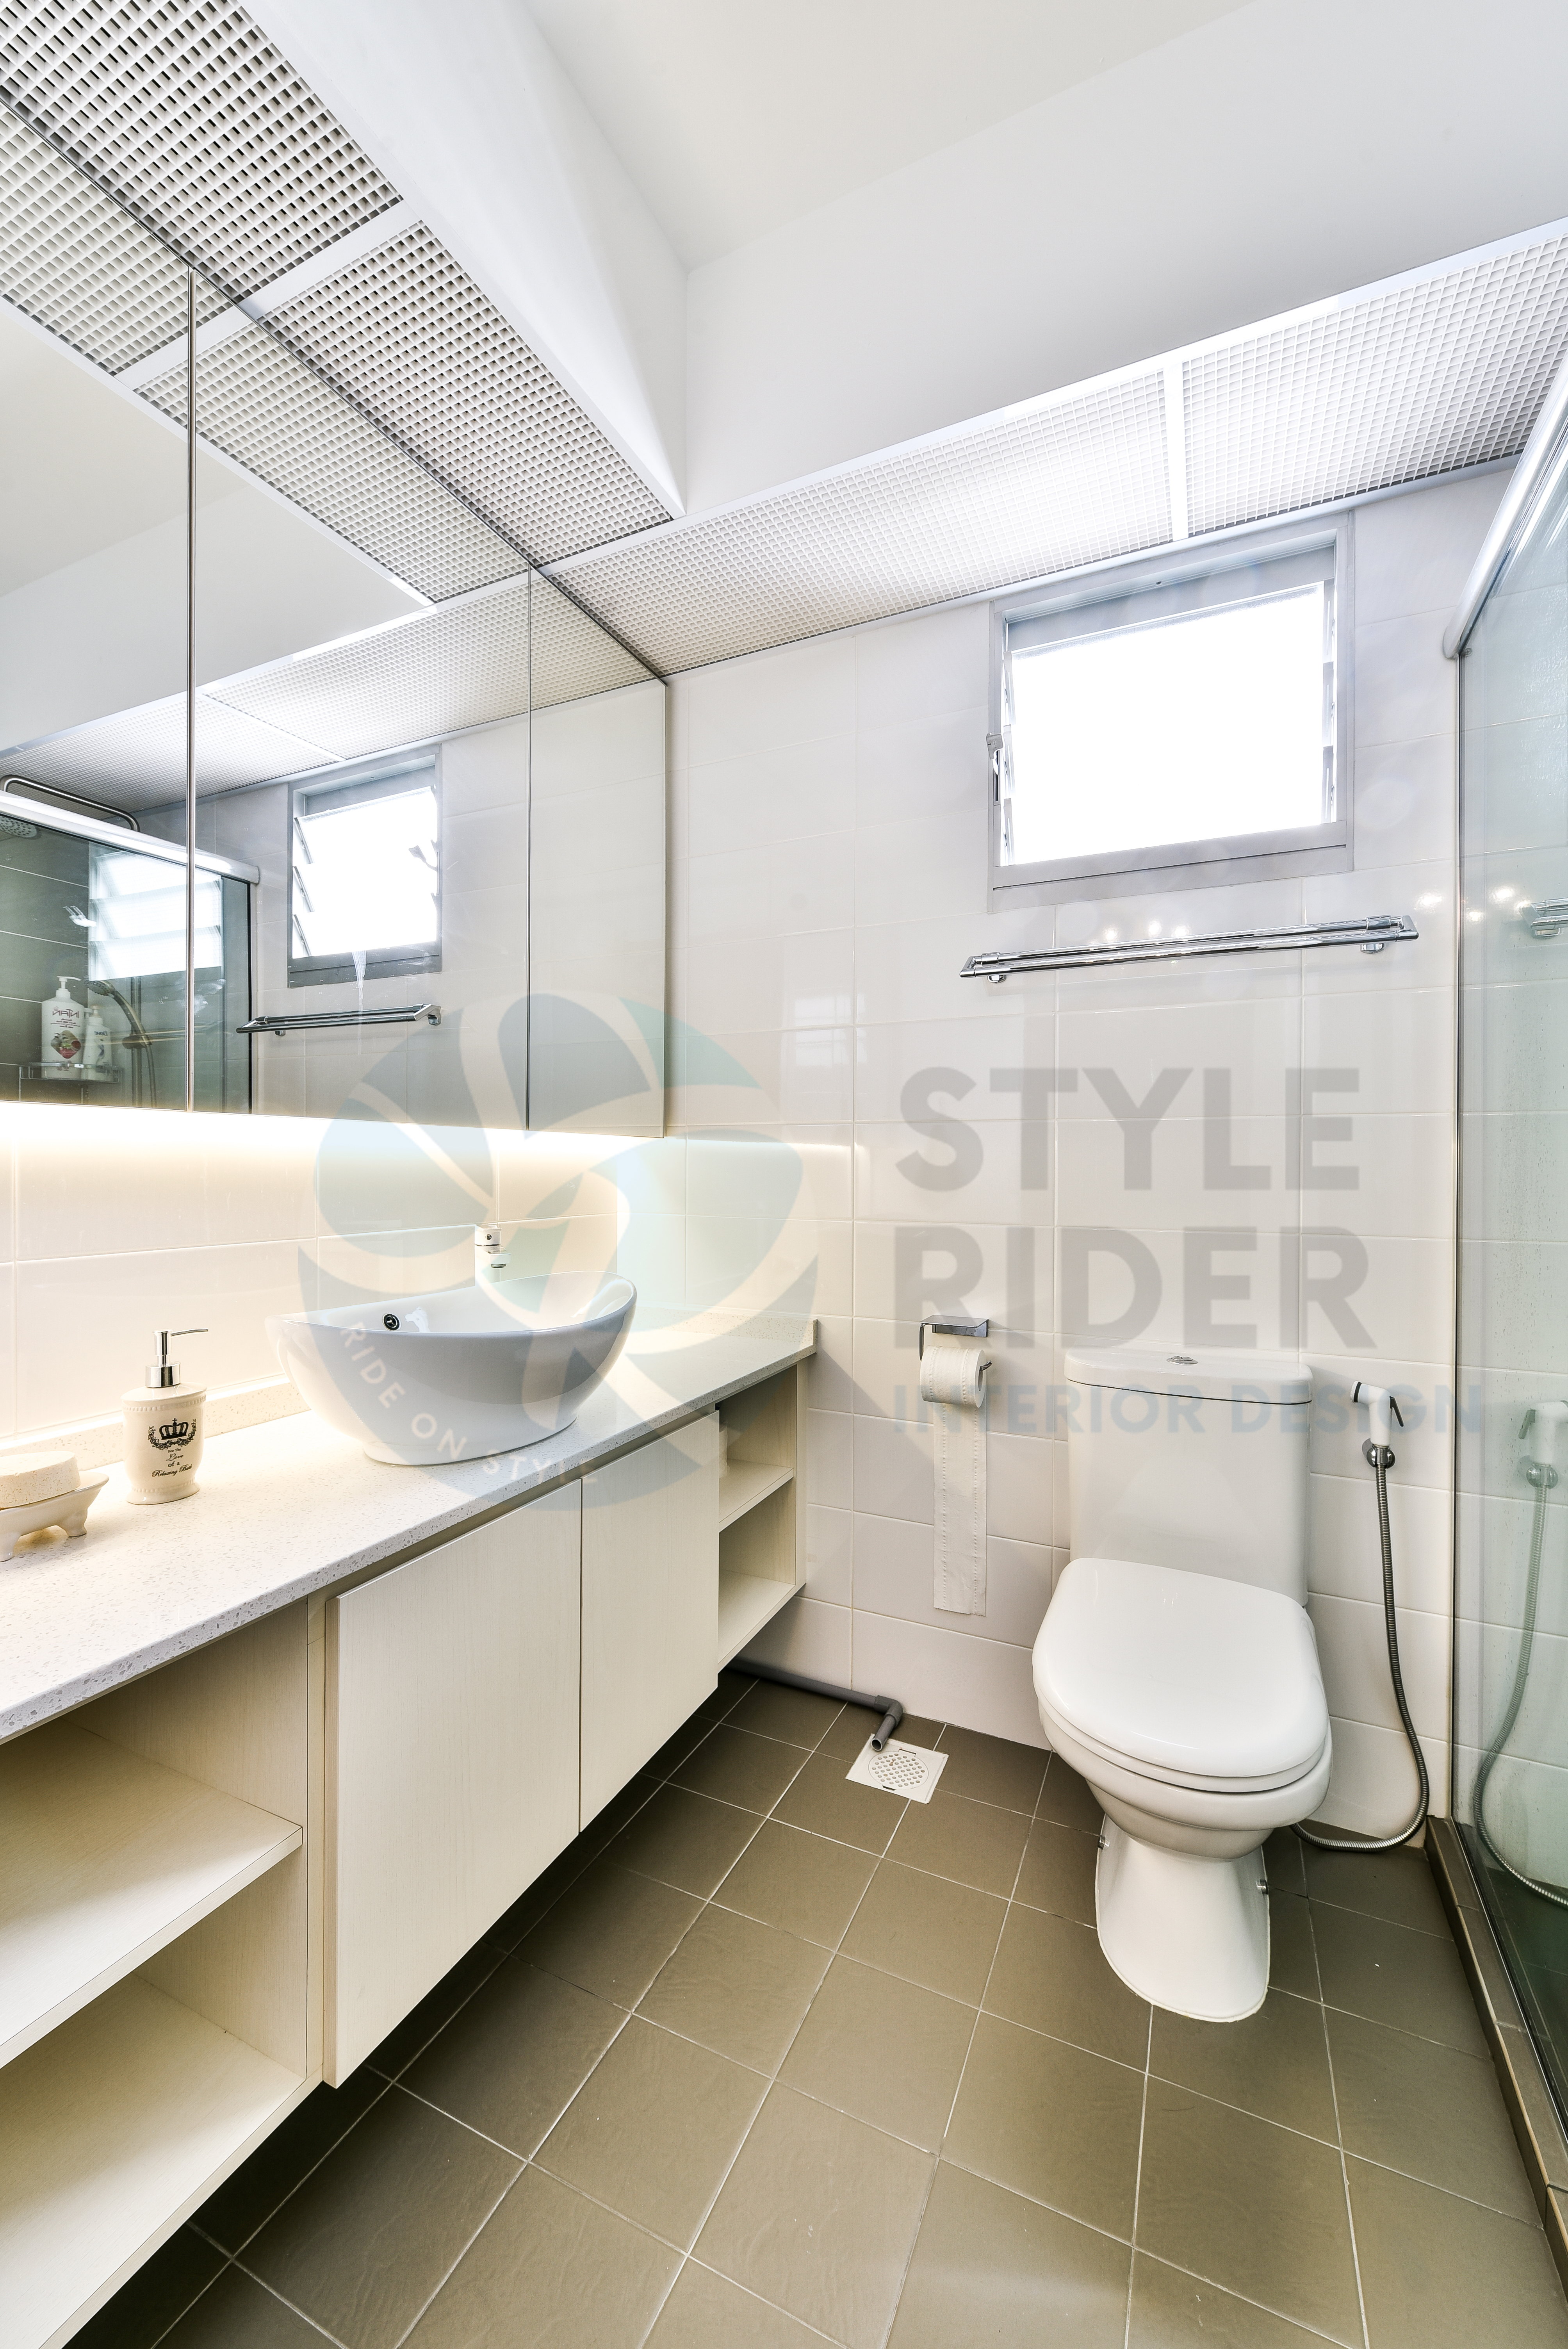 Modern Design - Bathroom - HDB Executive Apartment - Design by Stylerider Pte Ltd